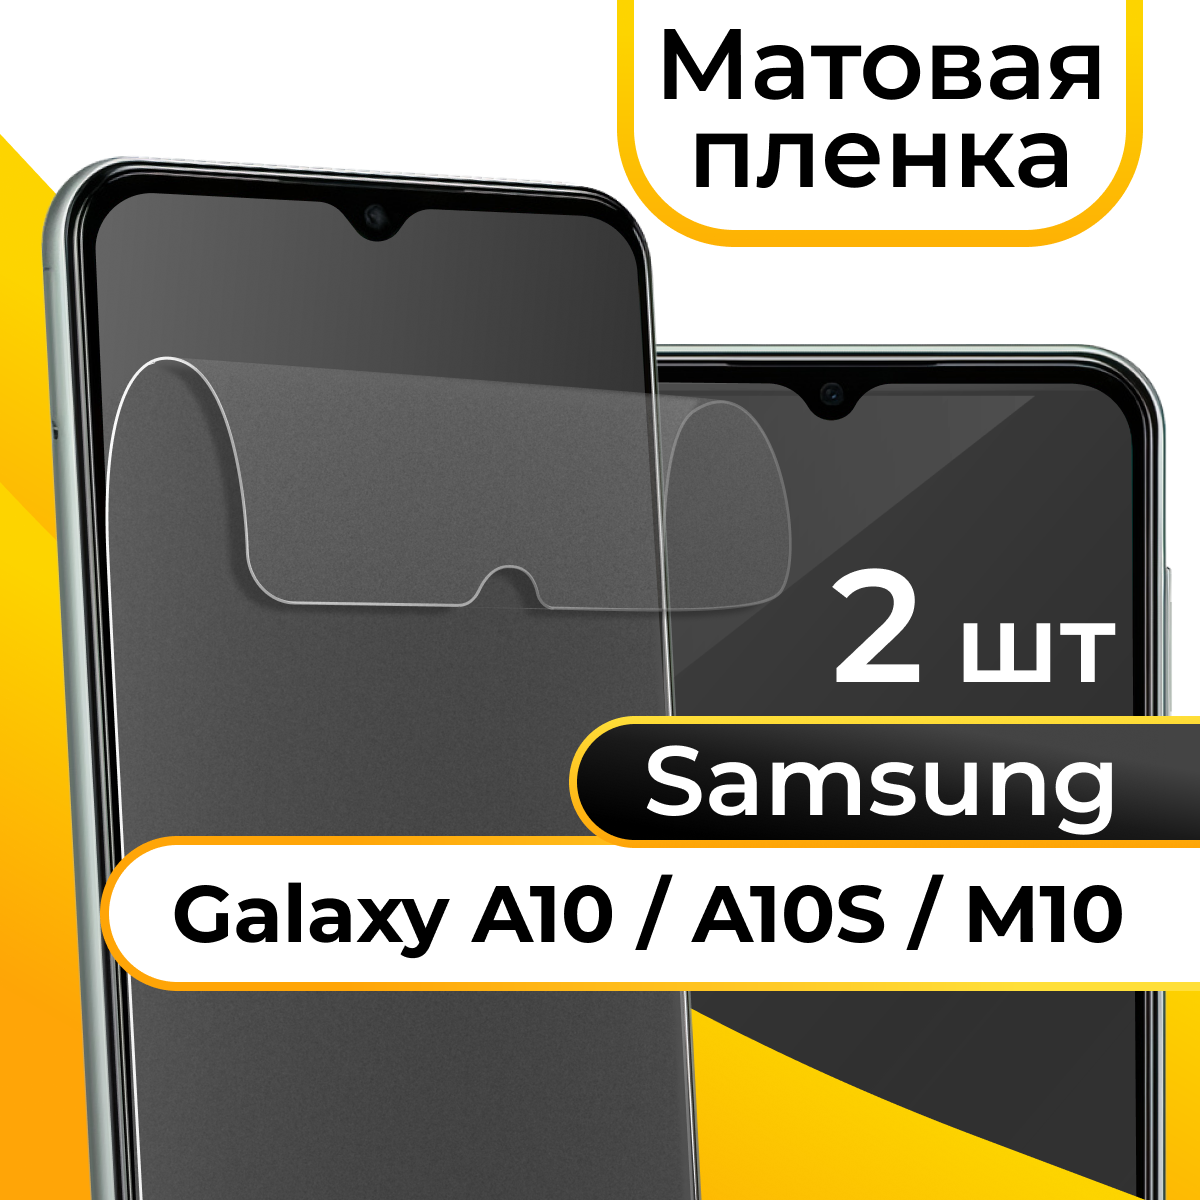 Матовая пленка для смартфона Samsung Galaxy A10 A10S и M10 / Защитная пленка на телефон Самсунг Галакси А10 А10С и М10 / Гидрогелевая пленка